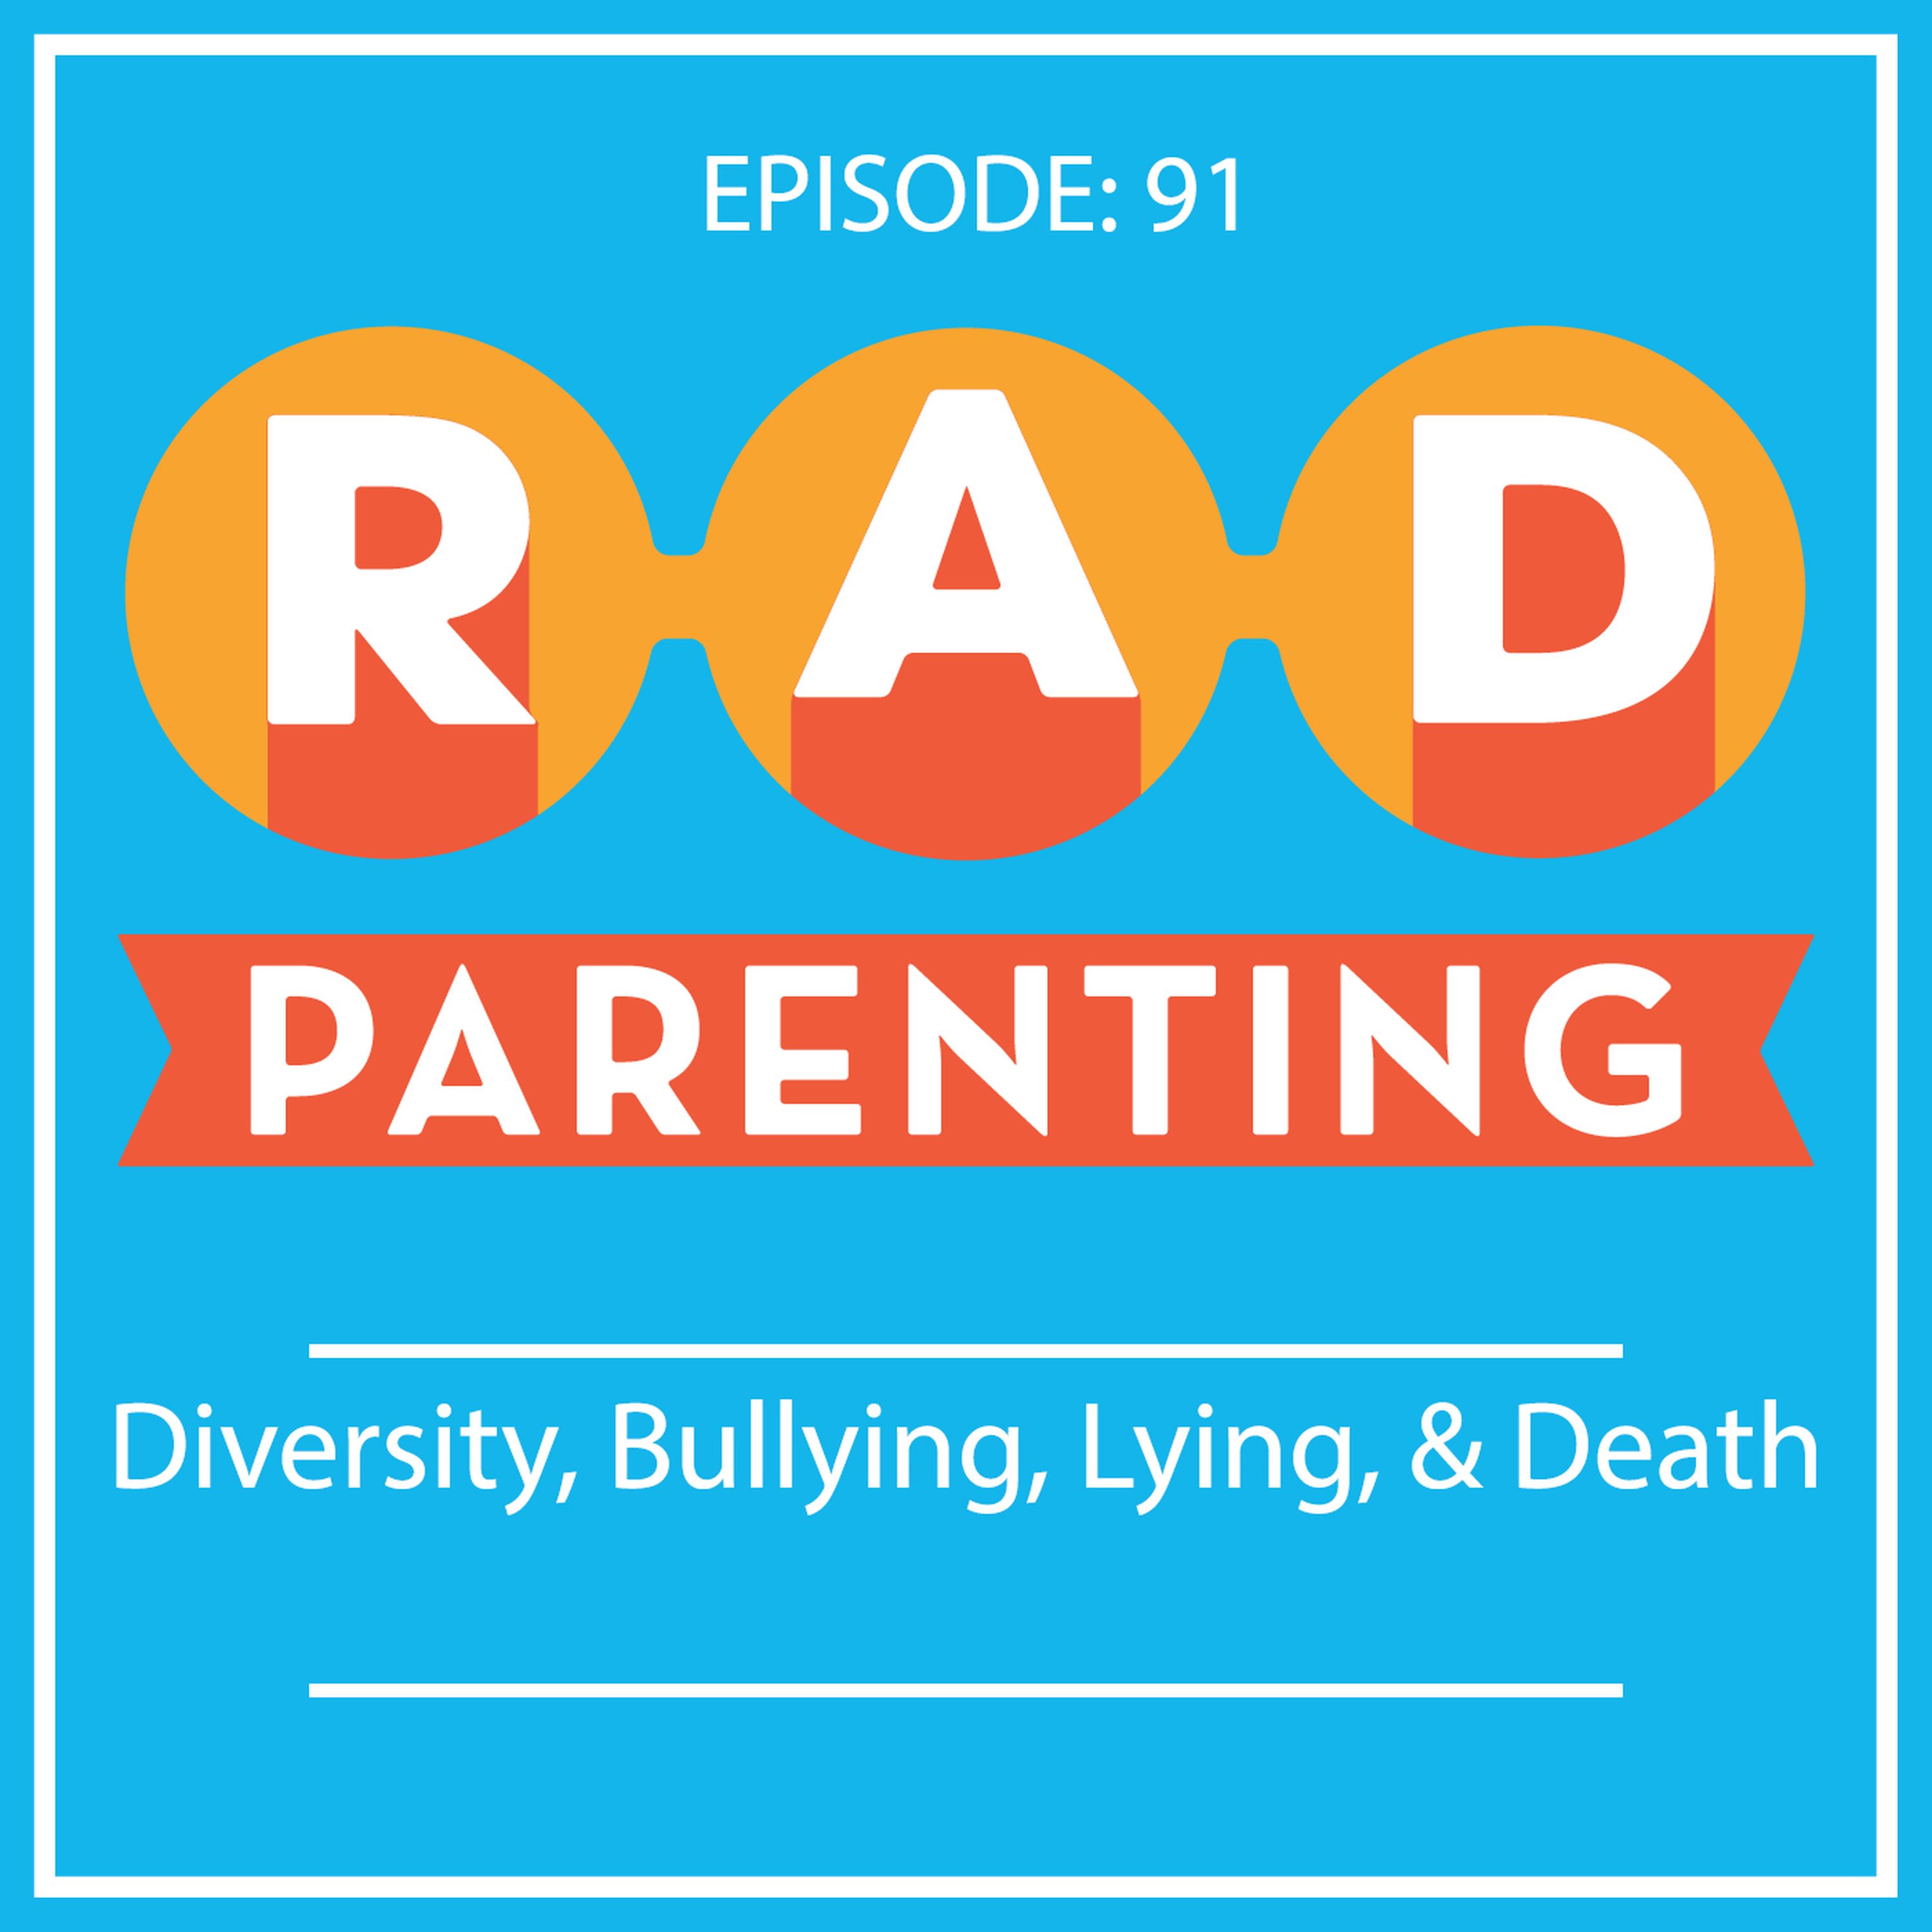 Diversity, Bullying, Lying, & Death